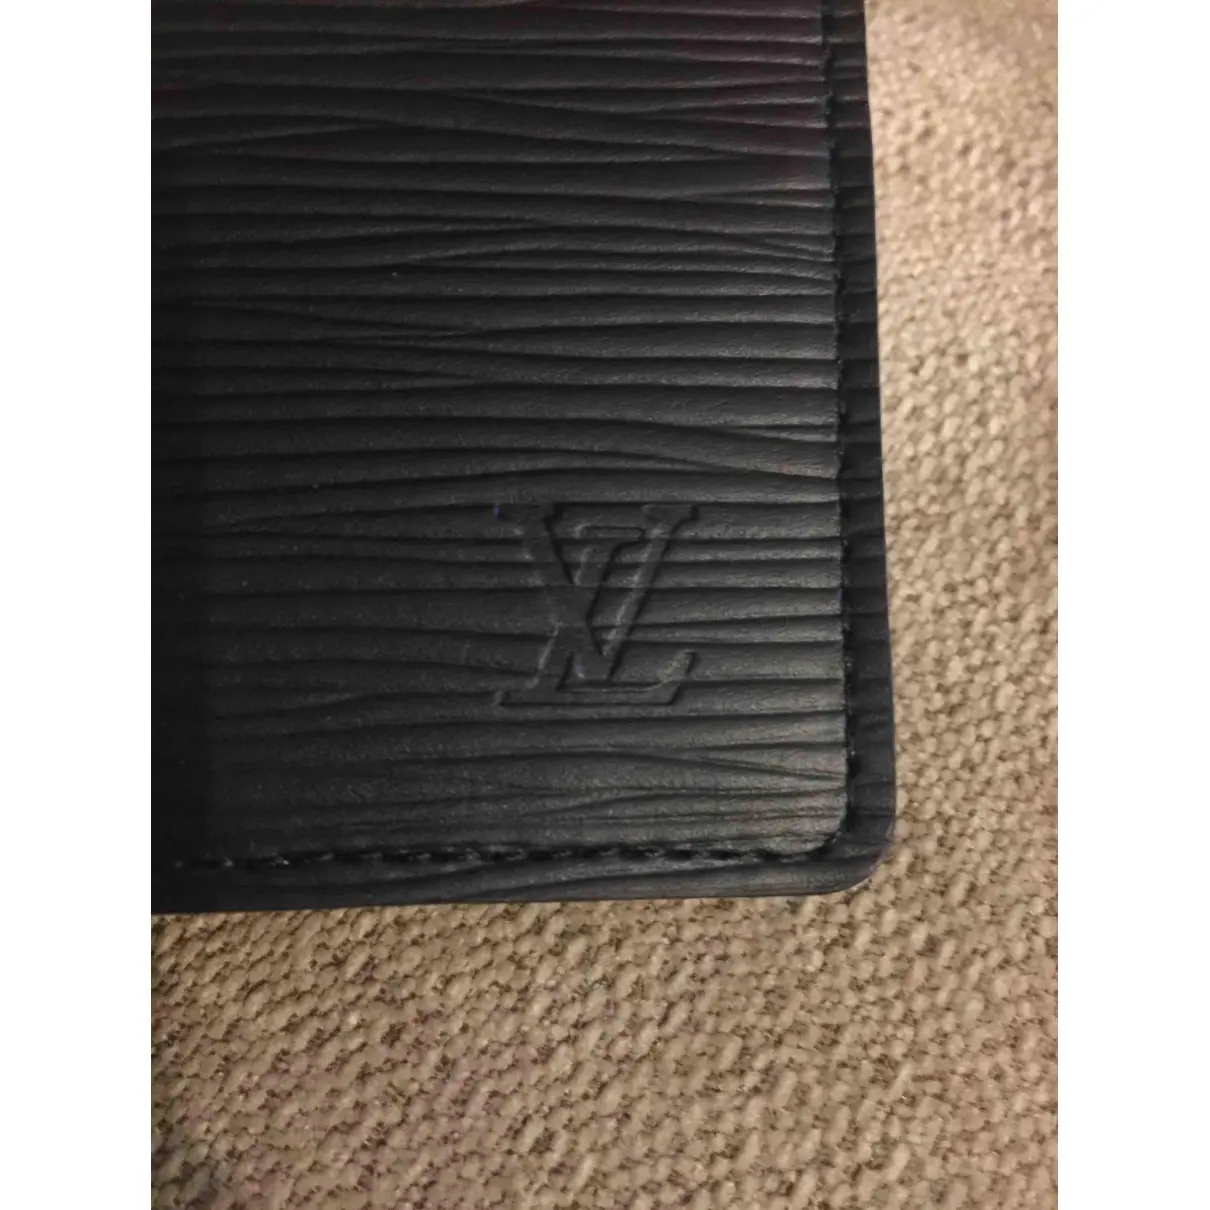 Leather card wallet Louis Vuitton